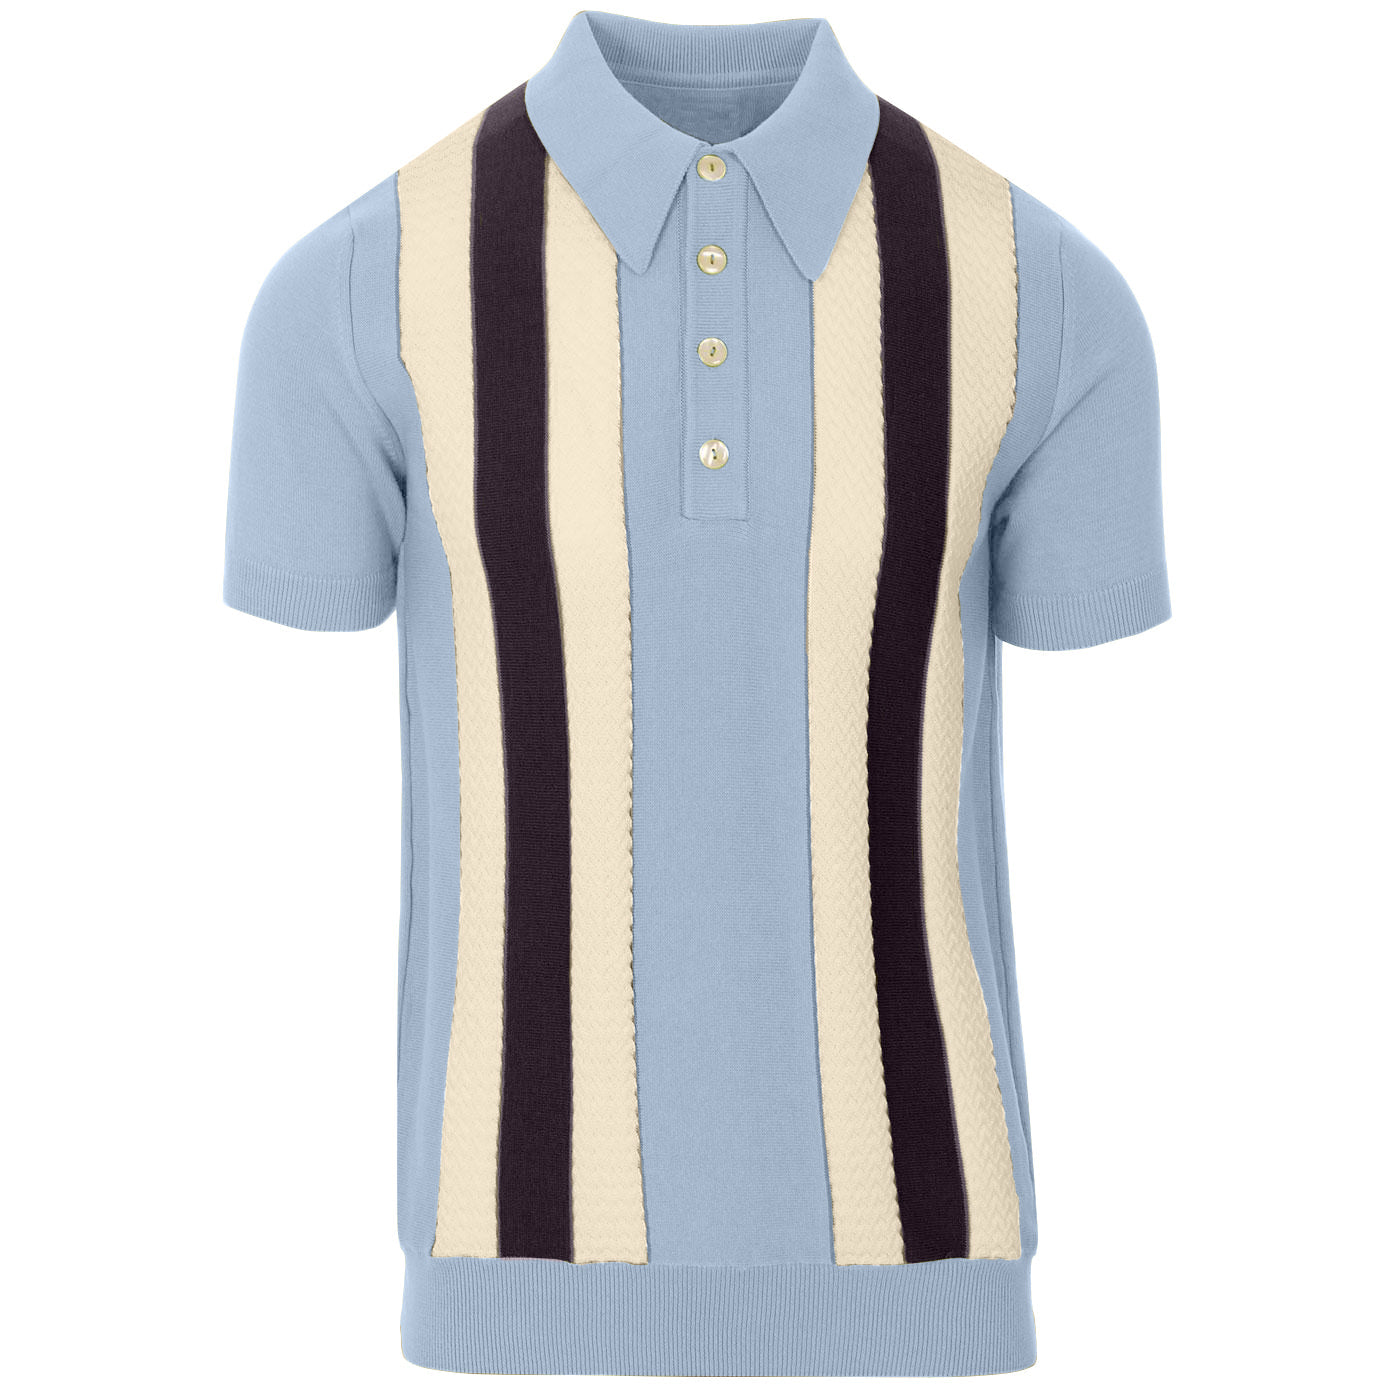 Men's Stripe Blue Knit Polo With White Jacquard Panel